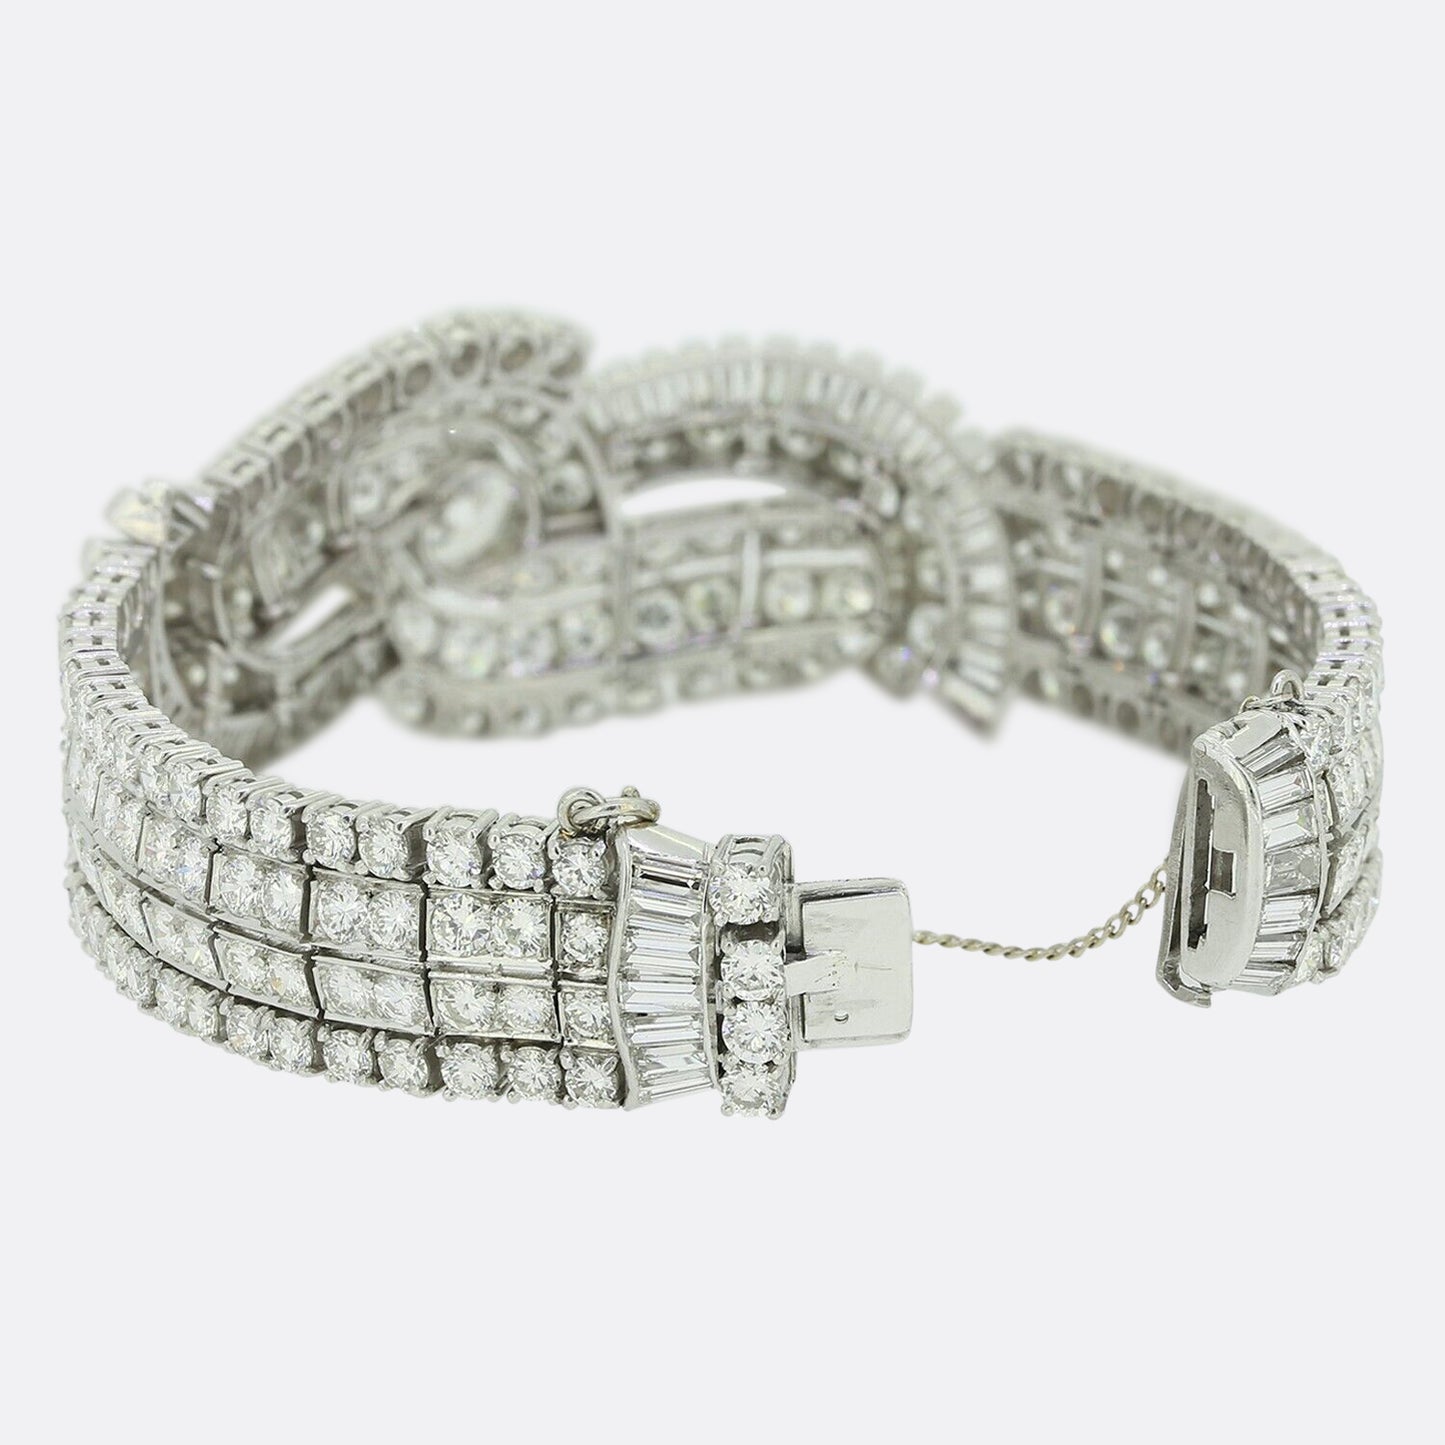 Vintage 23.0 Carat Diamond Bracelet